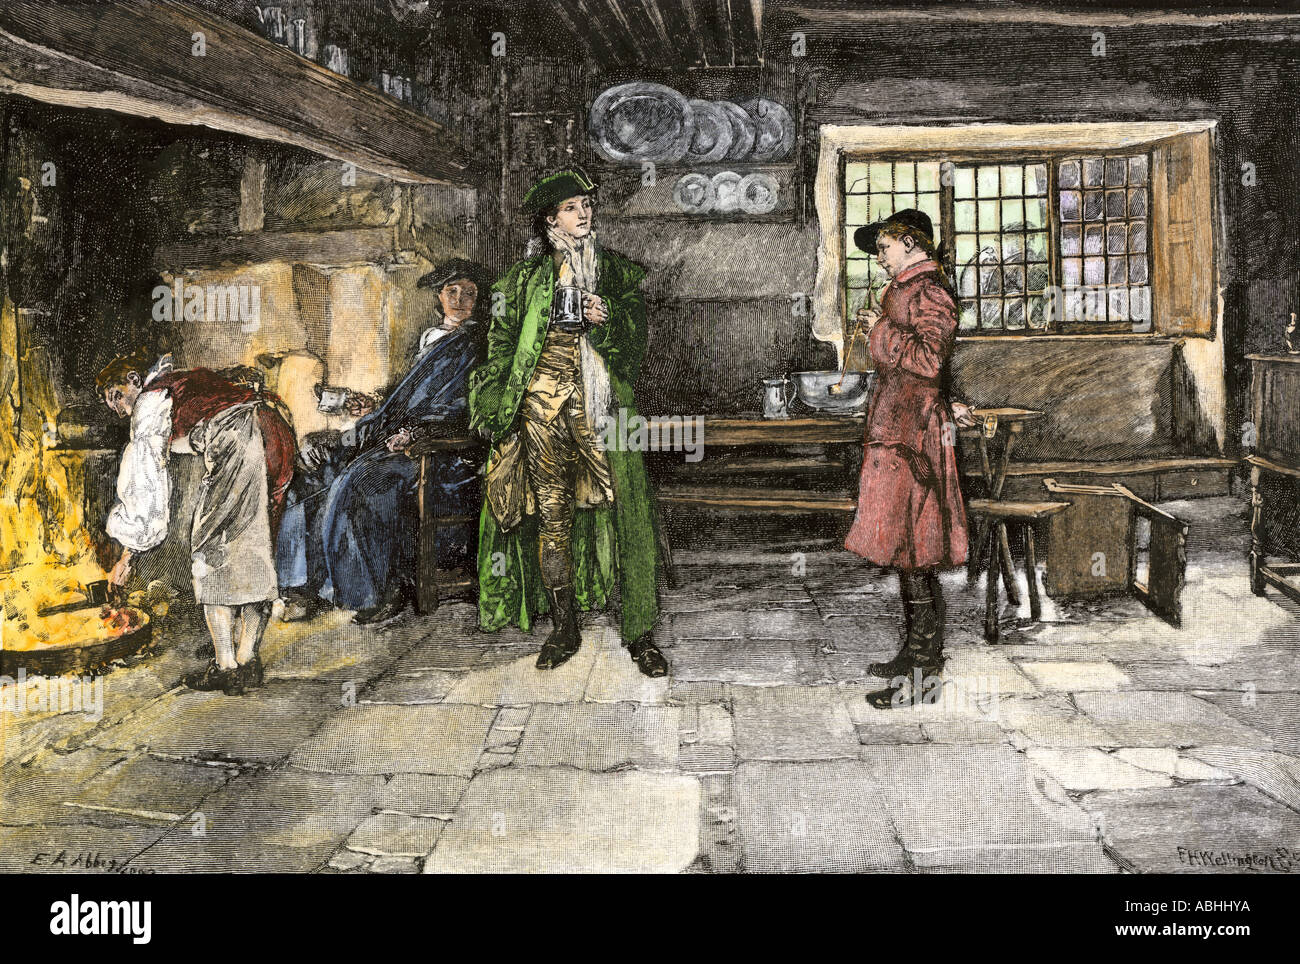 Wayfarers in an inn 1700s. Hand-colored woodcut Stock Photo